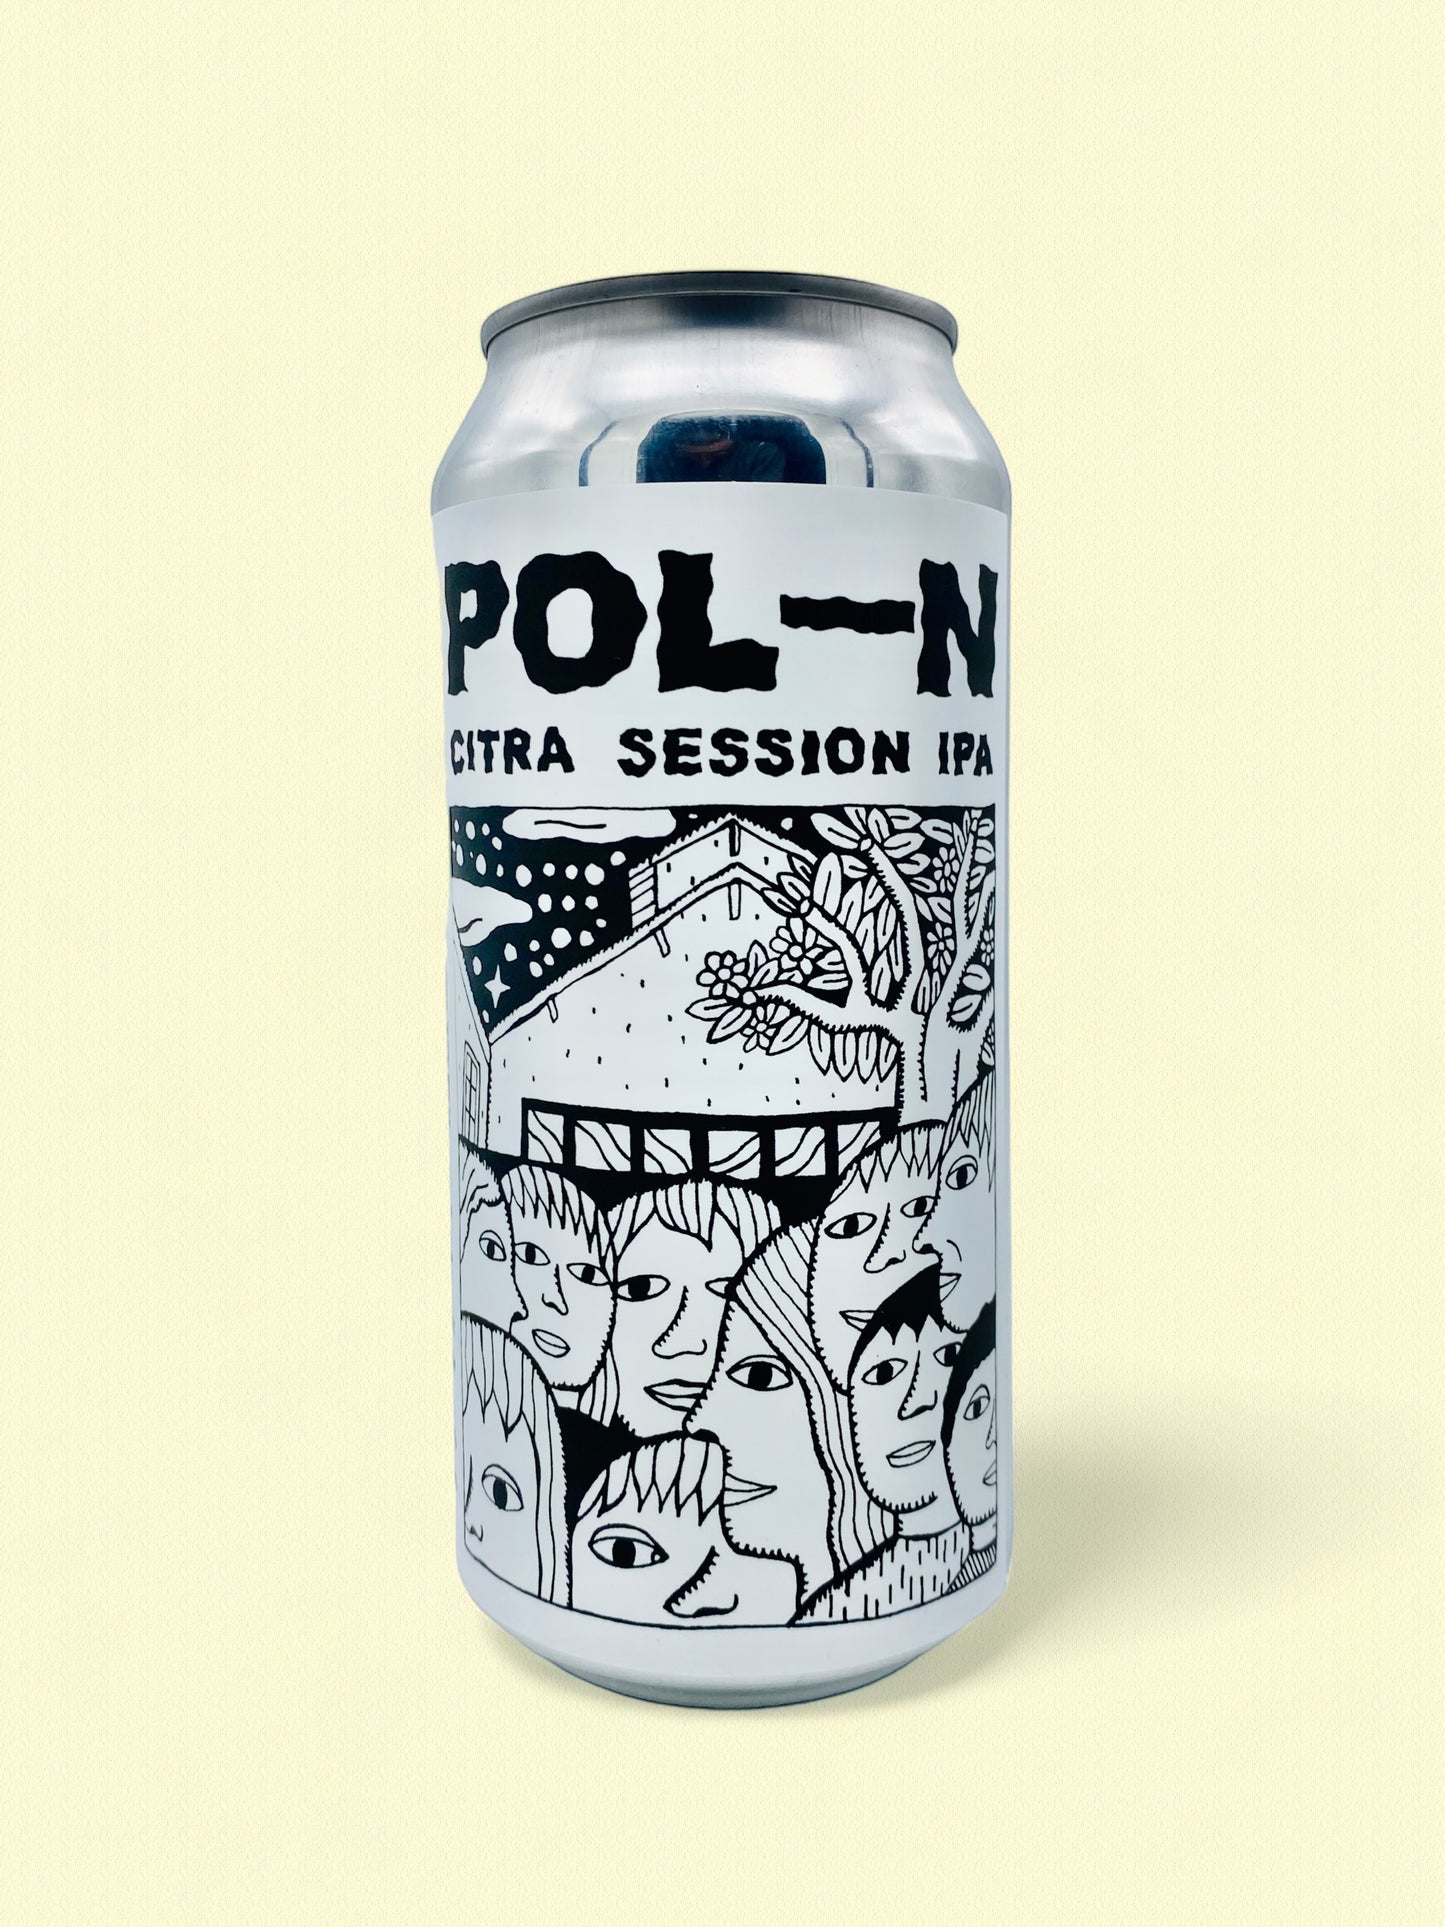 Pol-n | Bière Session IPA